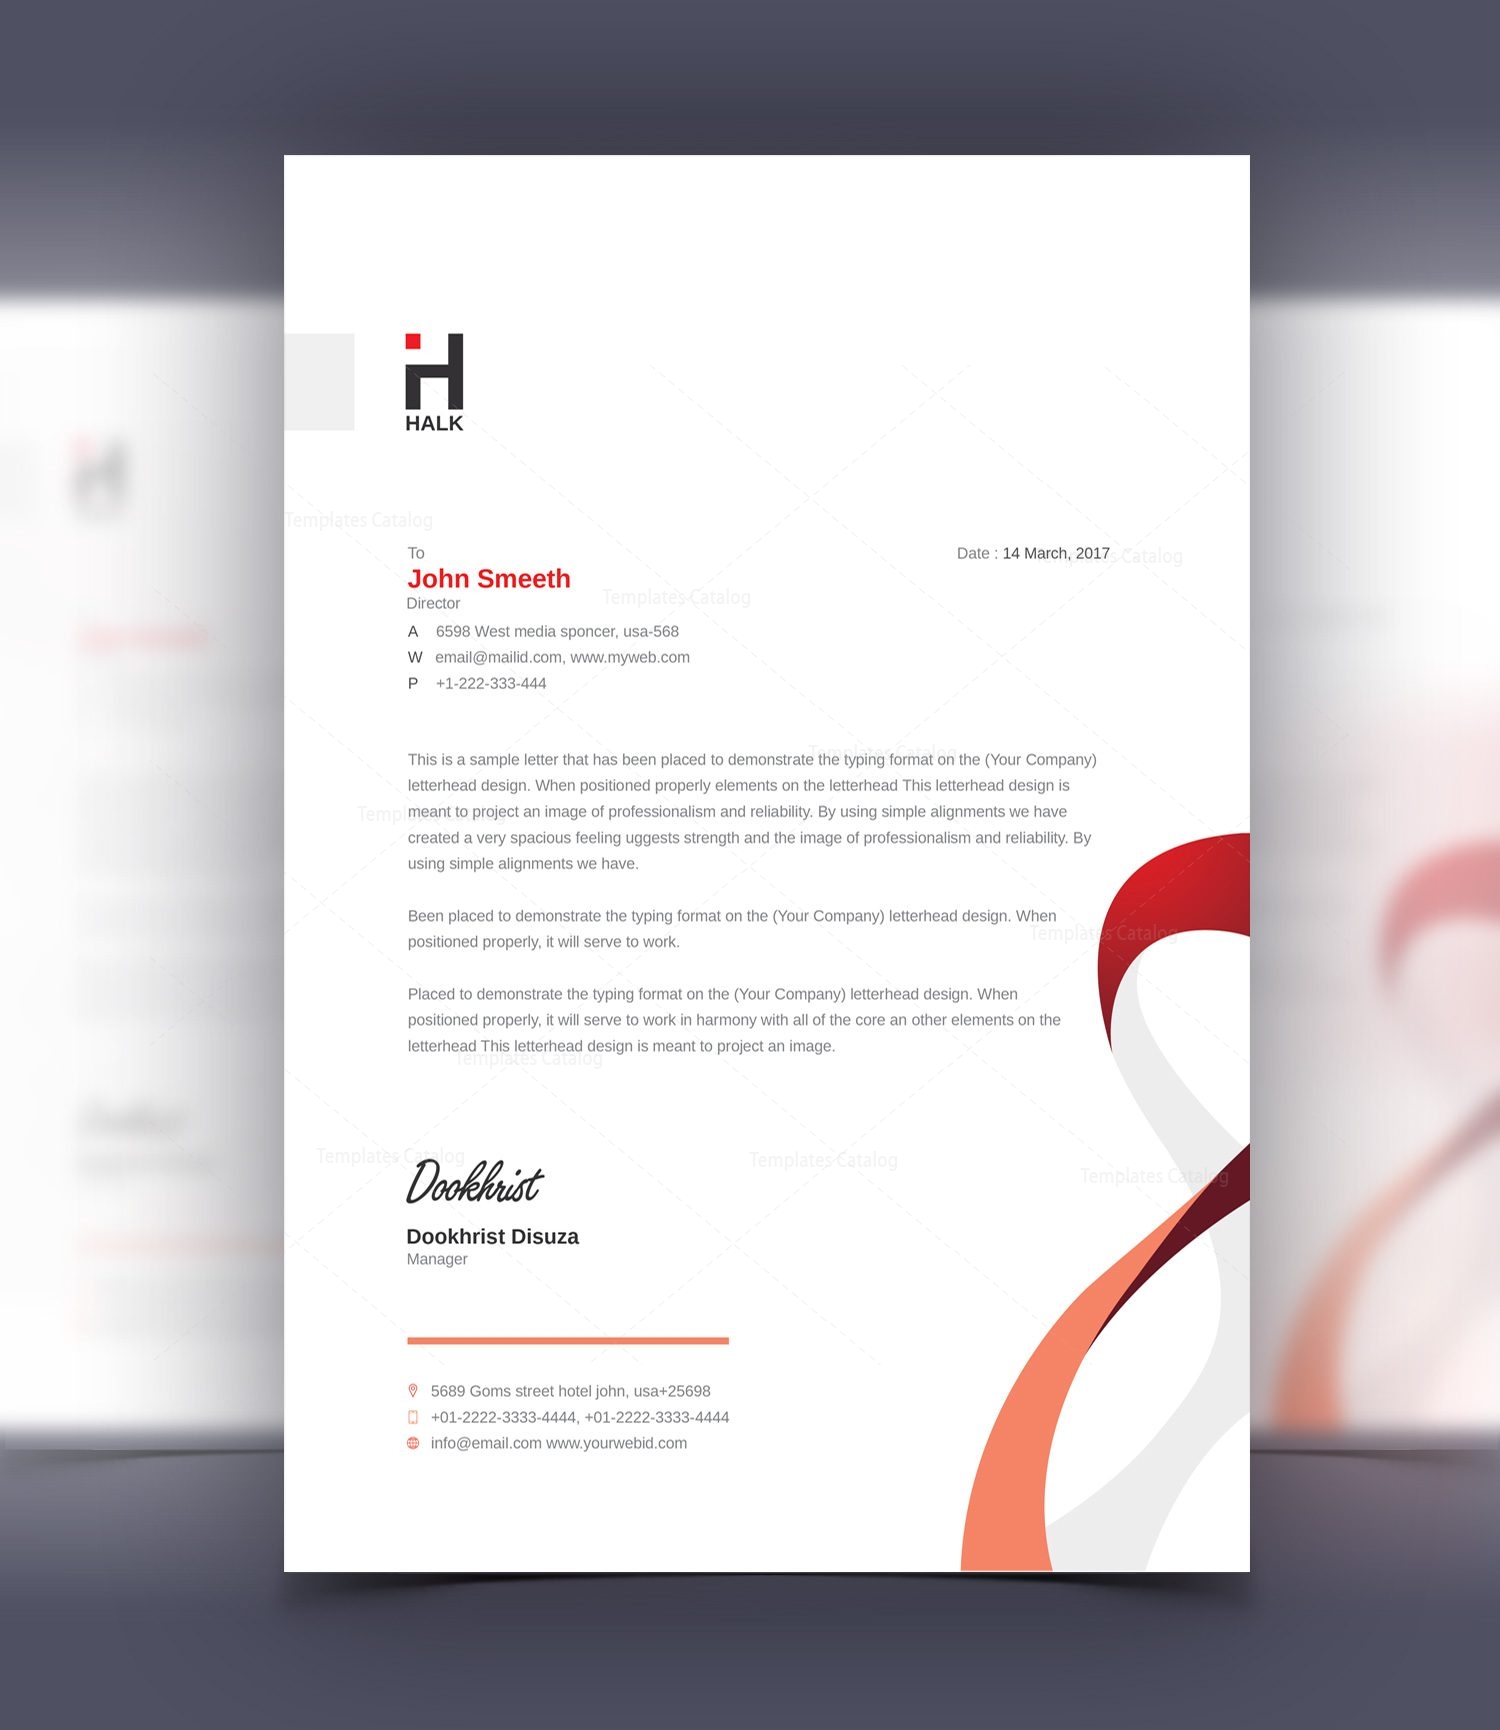 aeolus-professional-corporate-letterhead-template-001024-template-catalog